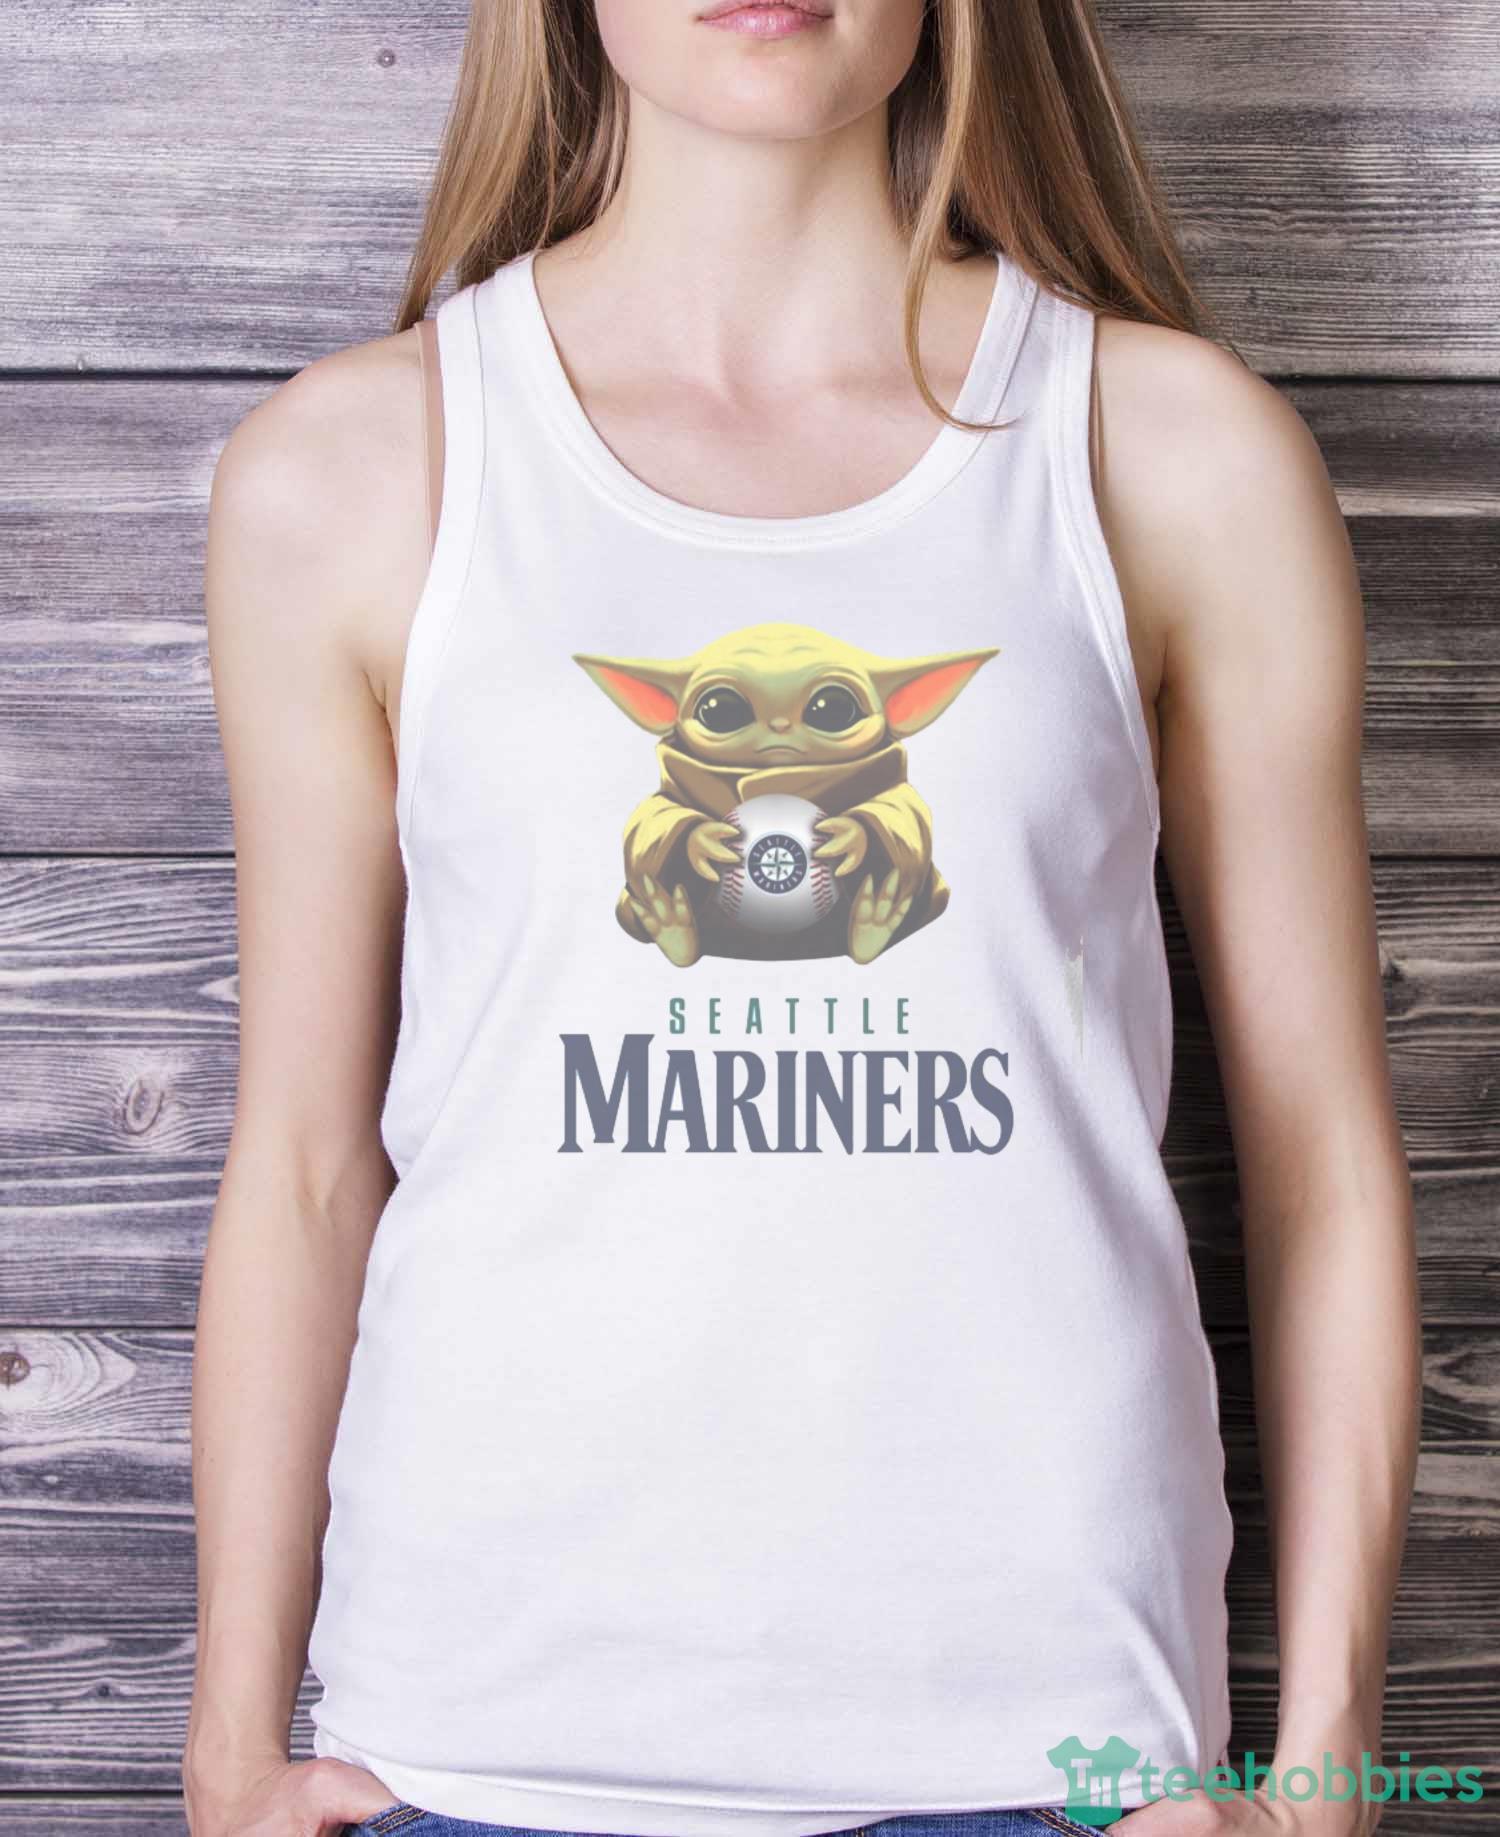 MLB Baseball Seattle Mariners Star Wars Baby Yoda Shirt T Shirt - White Ladies Tank Top